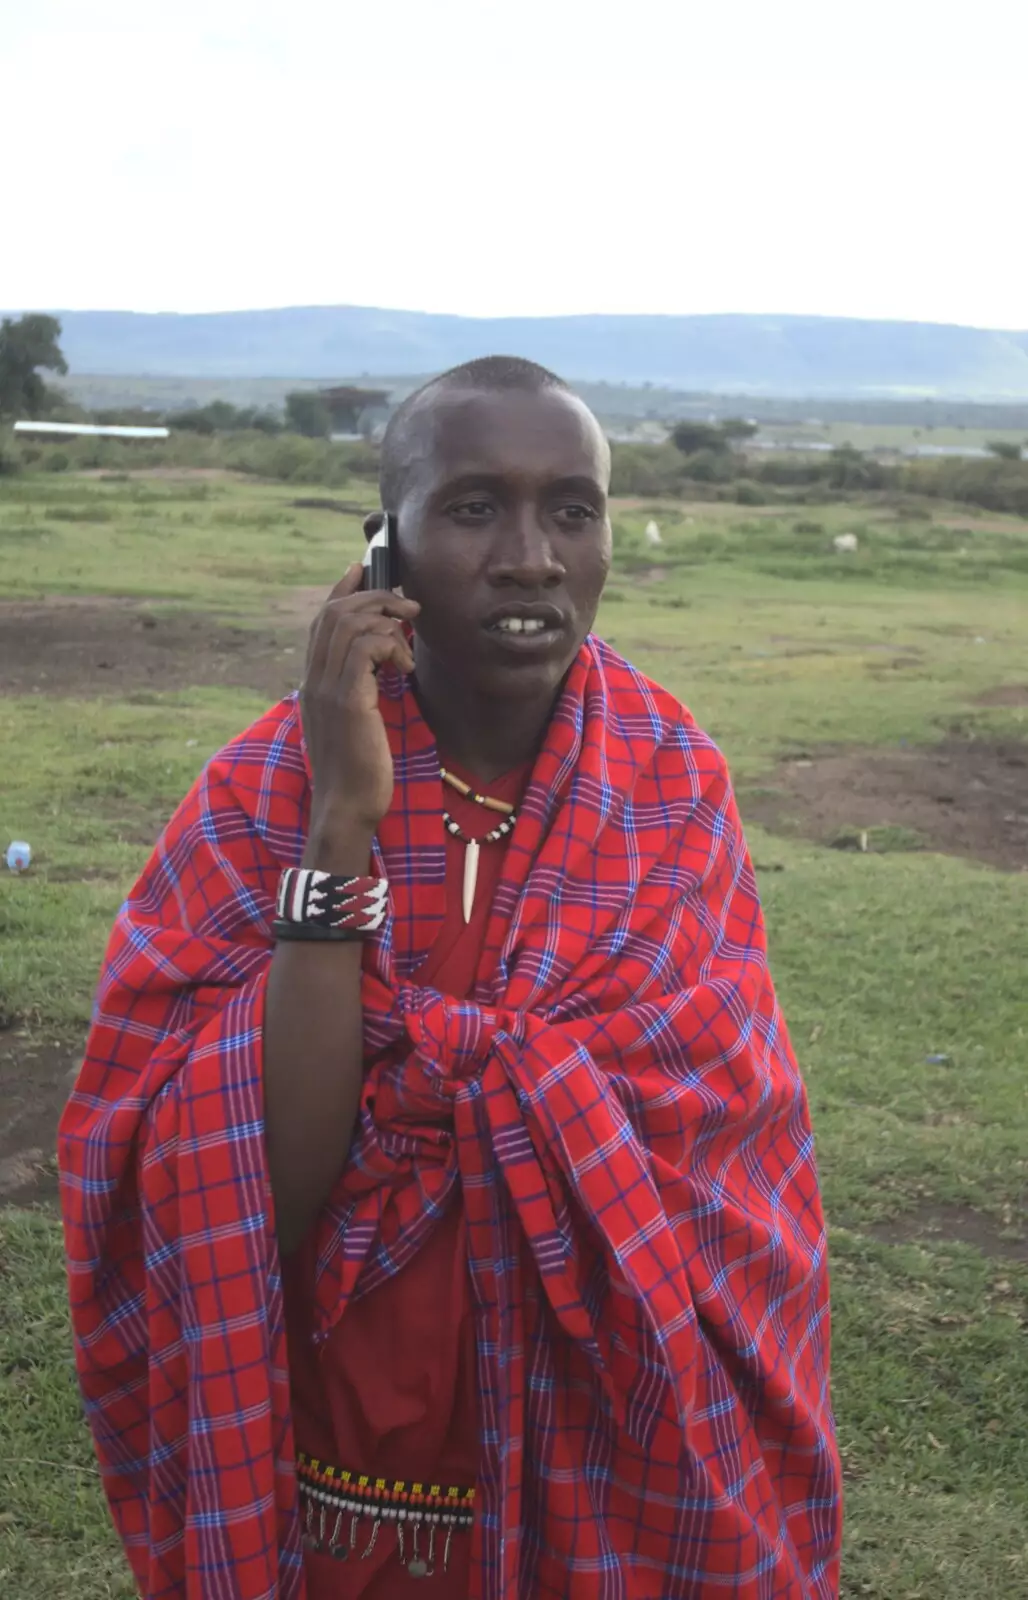 Modern Maasai, from Maasai Mara Safari and a Maasai Village, Ololaimutia, Kenya - 5th November 2010